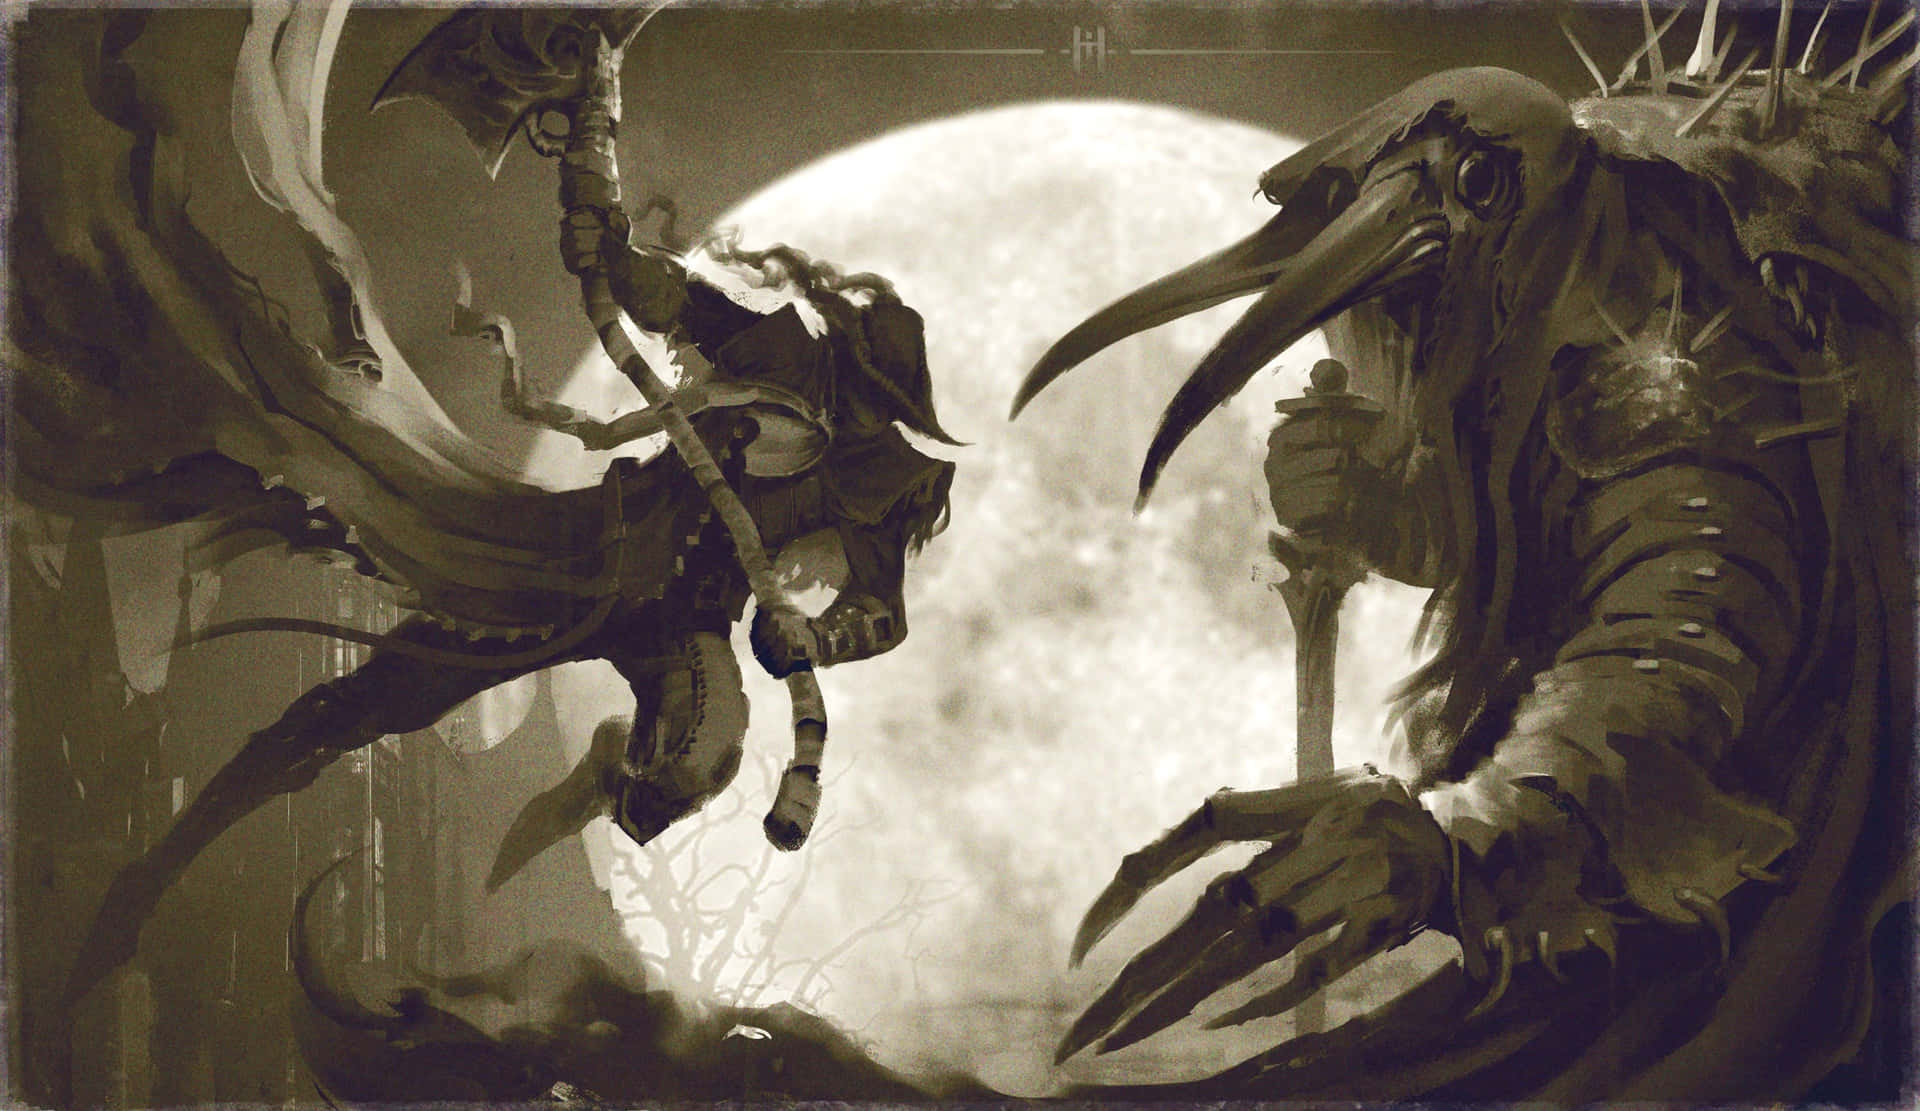 Monochrome Digital Artwork Of Bloodborne 4K HD Wallpaper